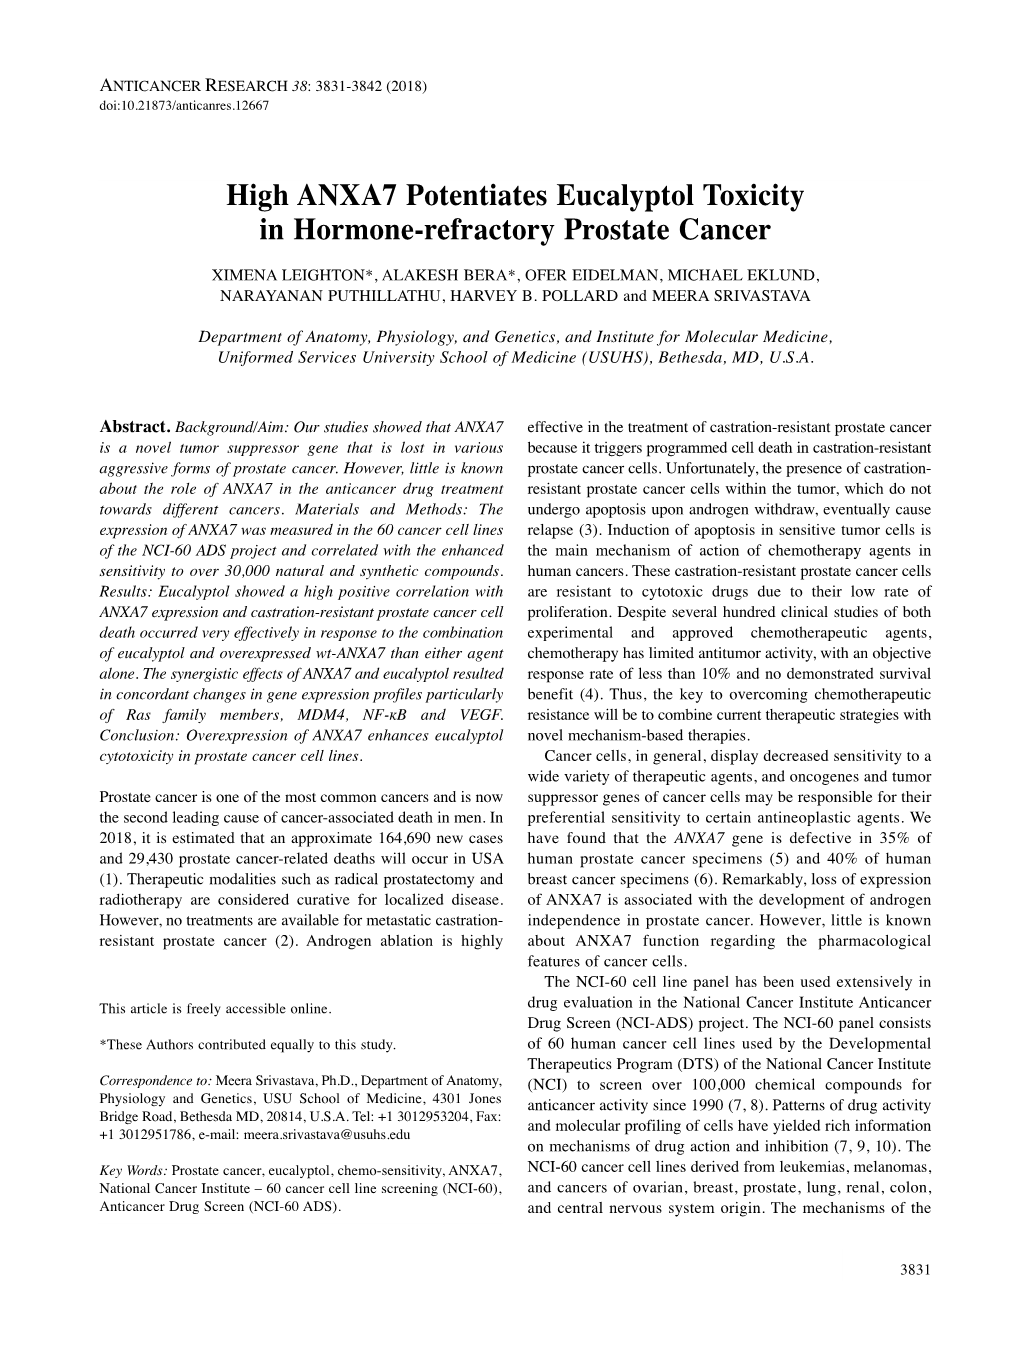 High ANXA7 Potentiates Eucalyptol Toxicity in Hormone-Refractory